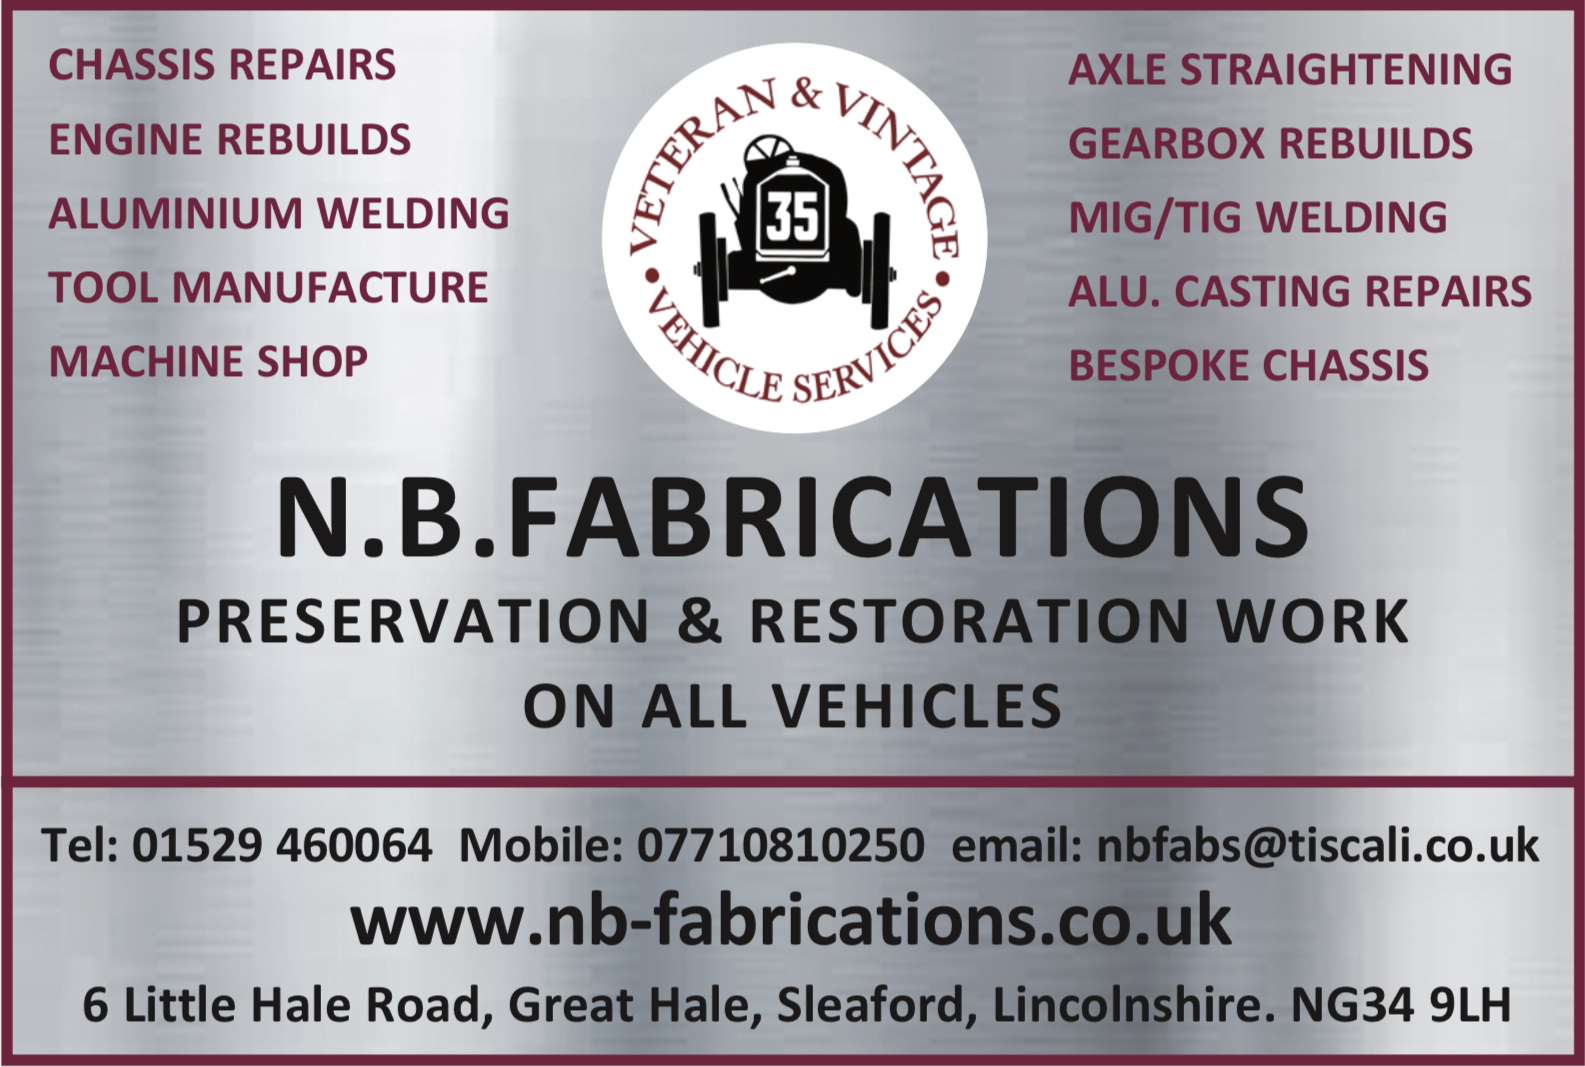 N. B. Fabrications - Veteran and vintage car restoration chassis repairs, engine rebuilds, aluminium welding, axel straightening, gearbox rebuilds, mig/tig welding, casting, bespoke chassis